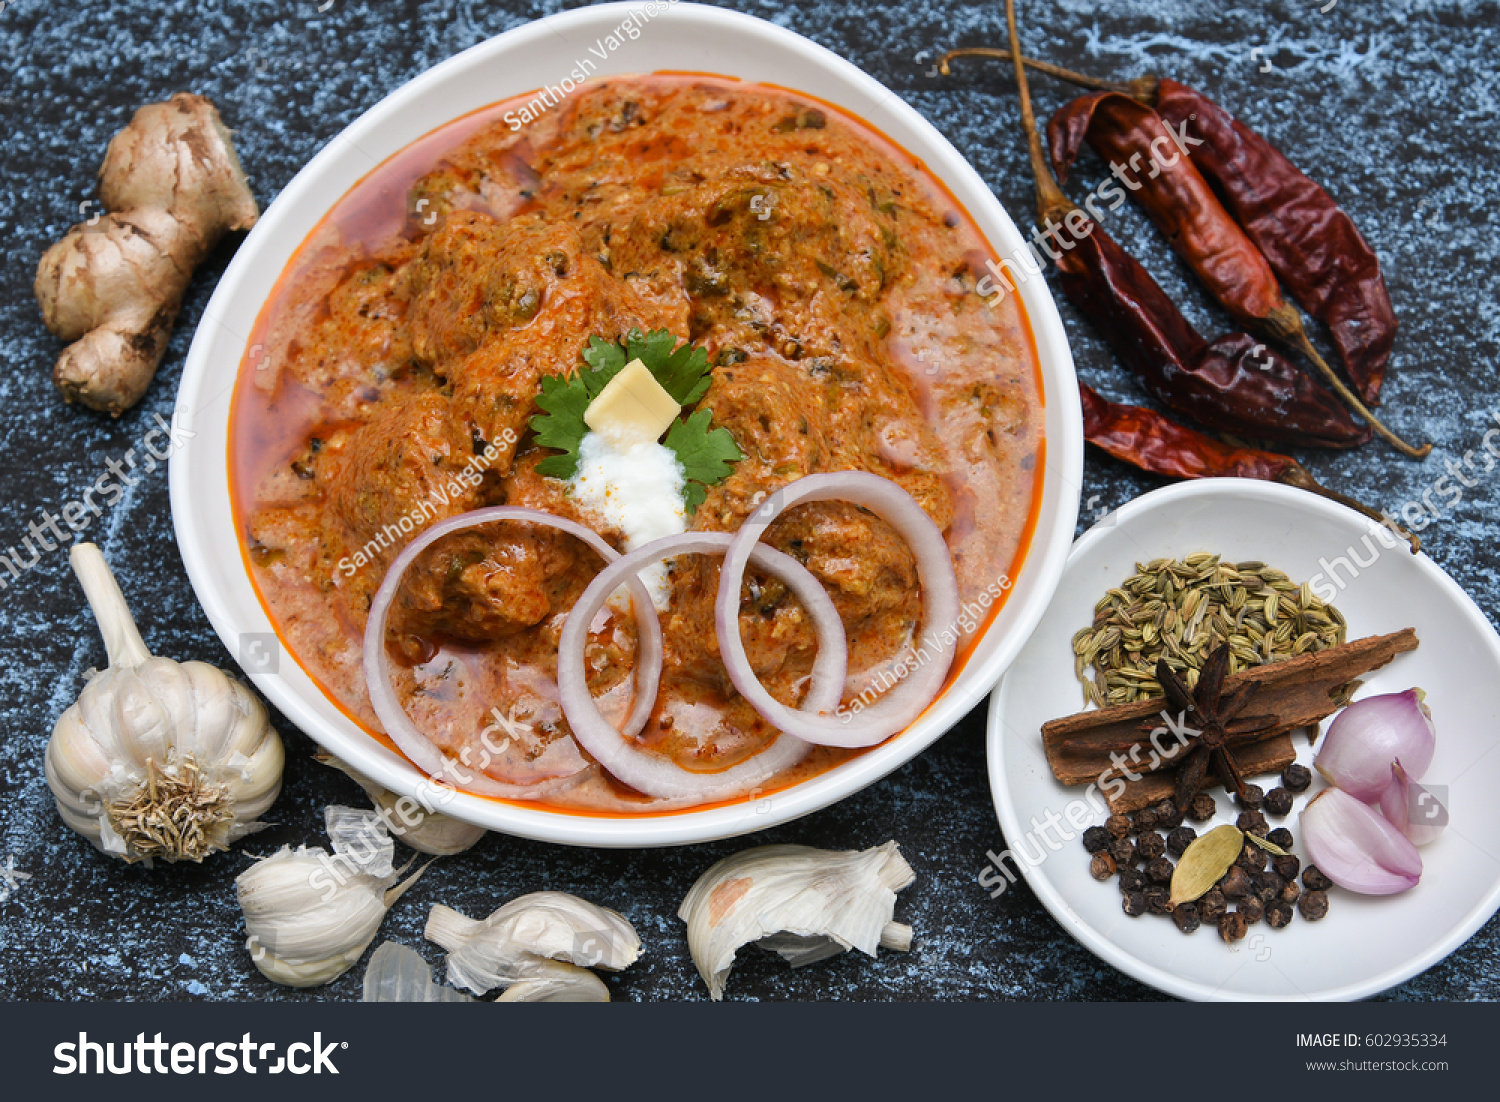 Kadai Chicken Karahi Currytikka Masalakorma Ingredients Food And Drink Stock Image